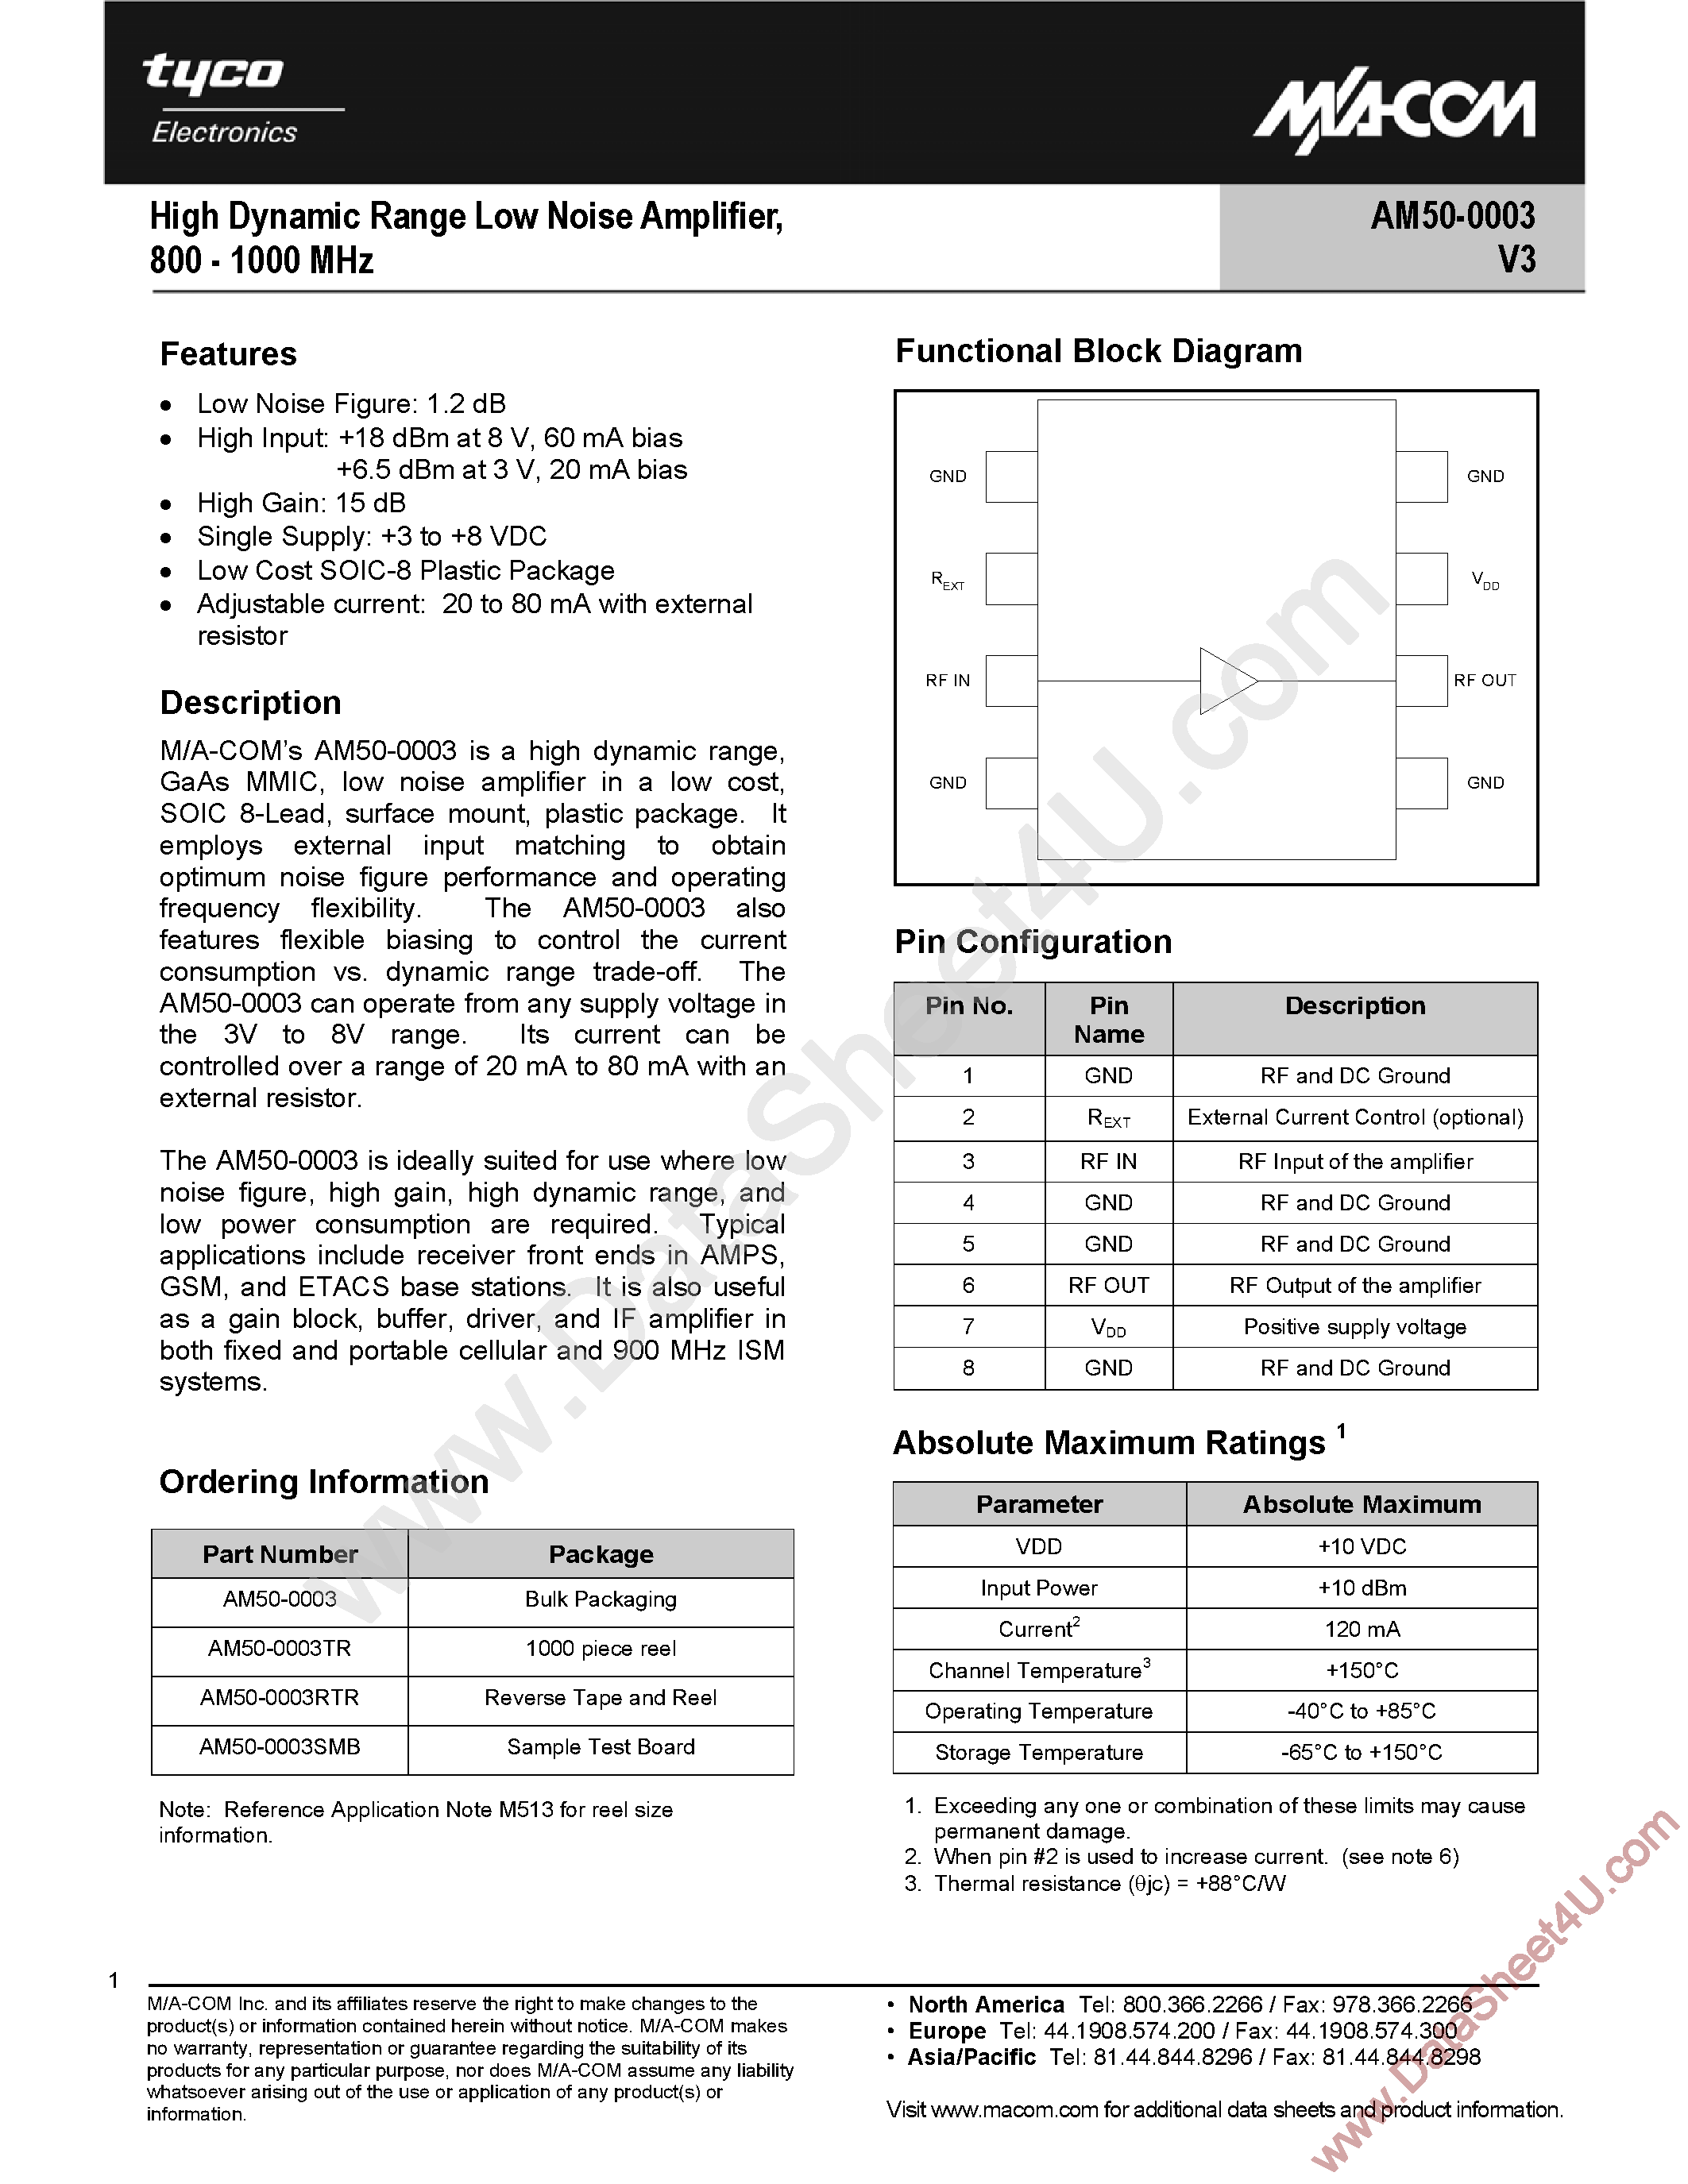 Datasheet AM50-0003V3 - High Dynamic Range Low Noise Amplifier page 1